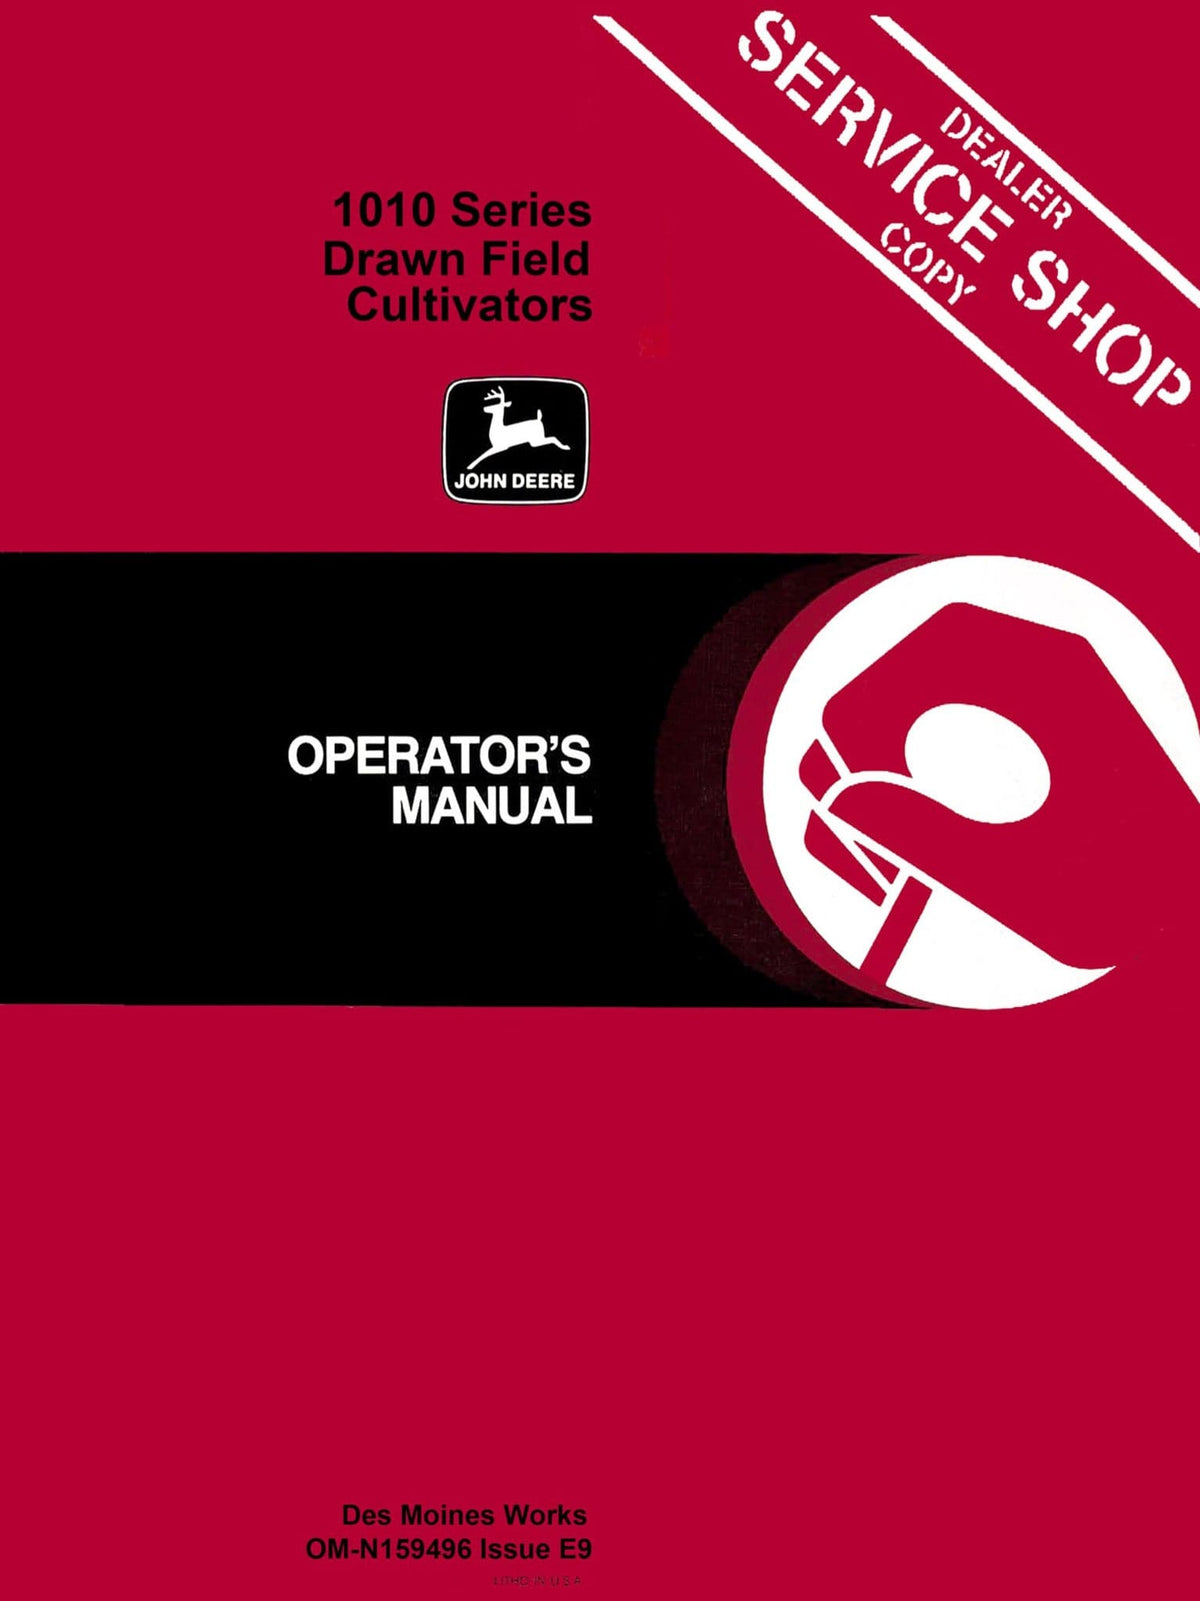 John Deere 1010 Series Drawn Field Cultivator - Operator's Manual - Ag Manuals - A Provider of Digital Farm Manuals - 1